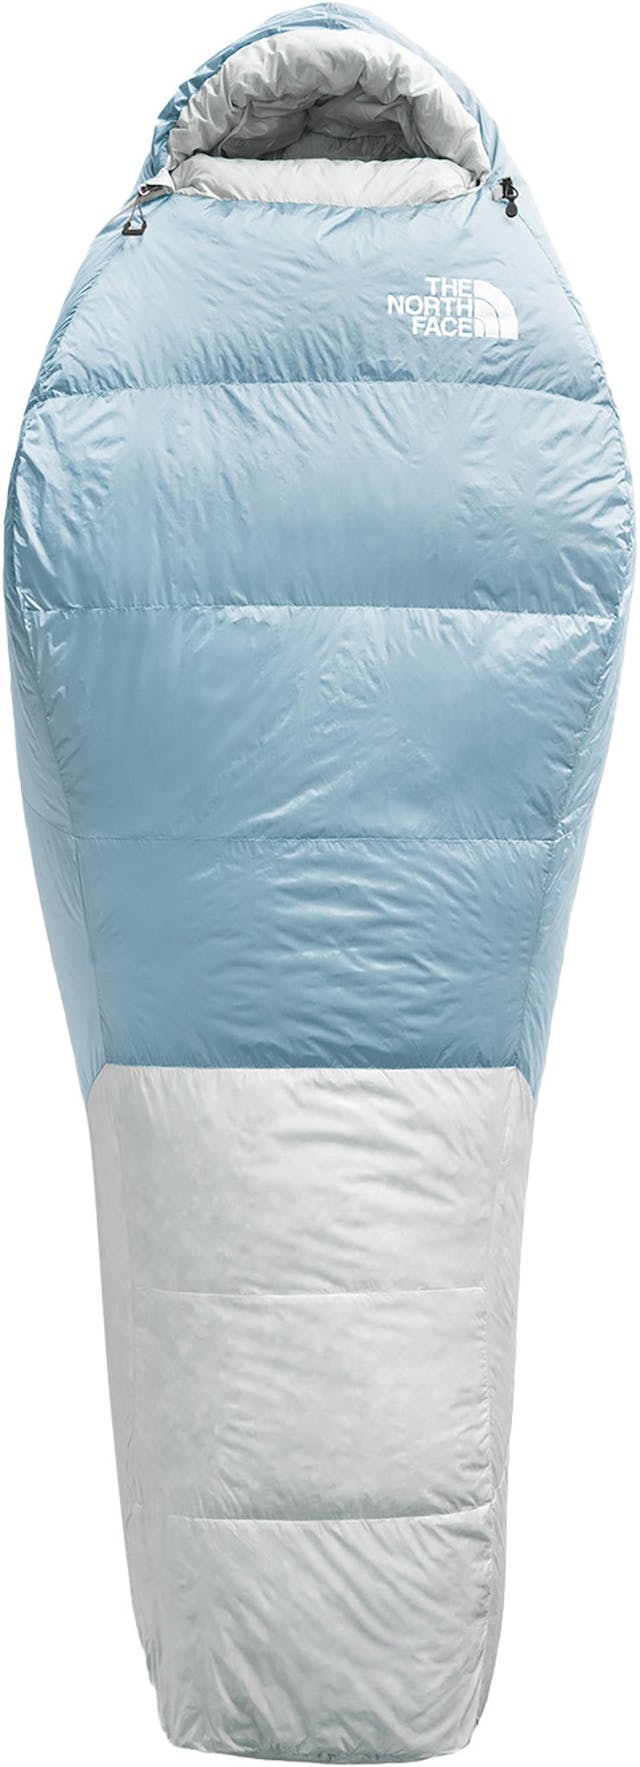 Product image for Blue Kazoo Eco Sleeping Bag -20°F/-7°C- Women's